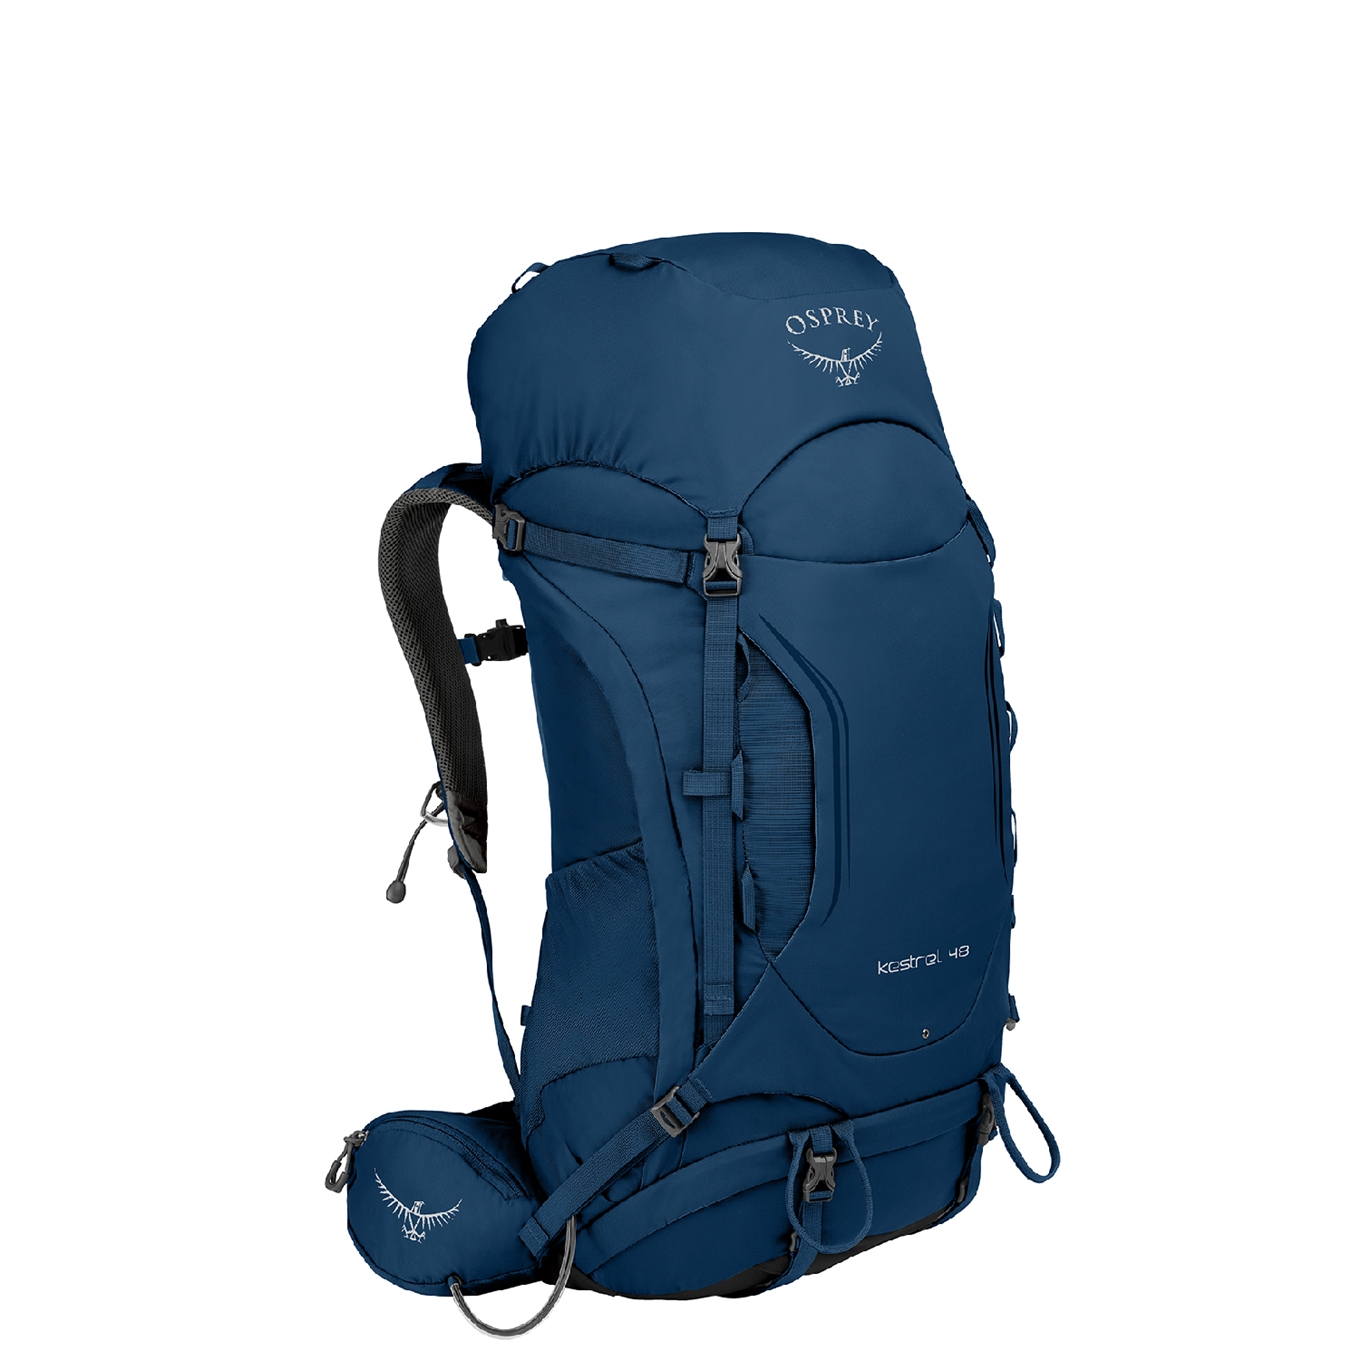 Osprey Kestrel 48 Backpack S/M loch blue backpack